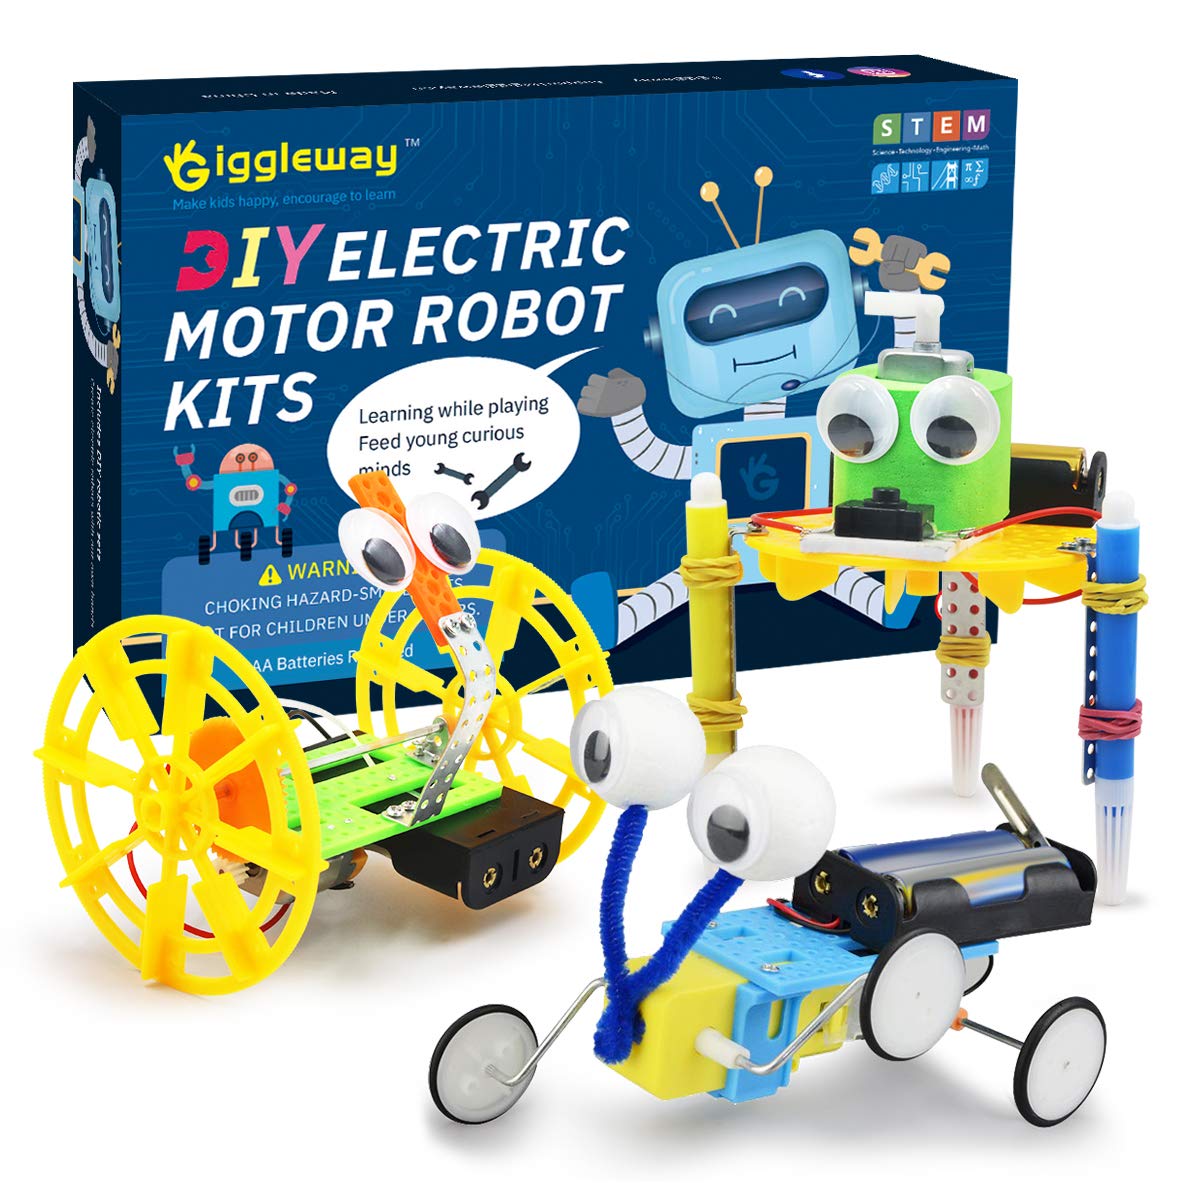 Giggleway Electric Motor Robotic Science Kits